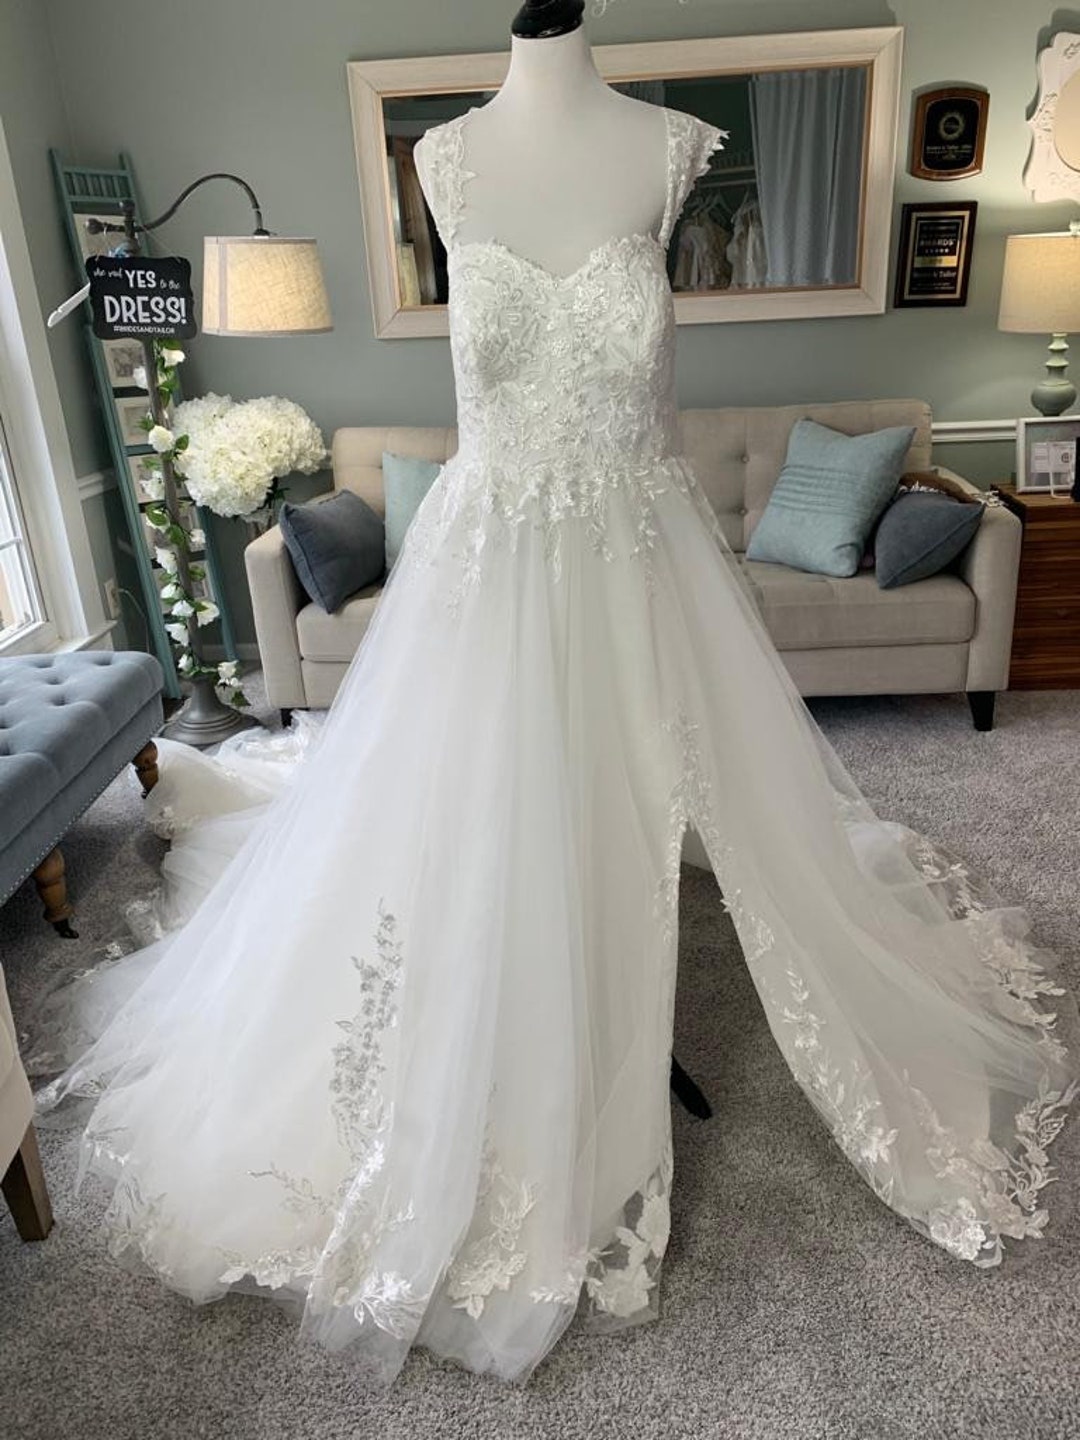 Custom Floral Wedding Dress by Brides & Tailor - Etsy